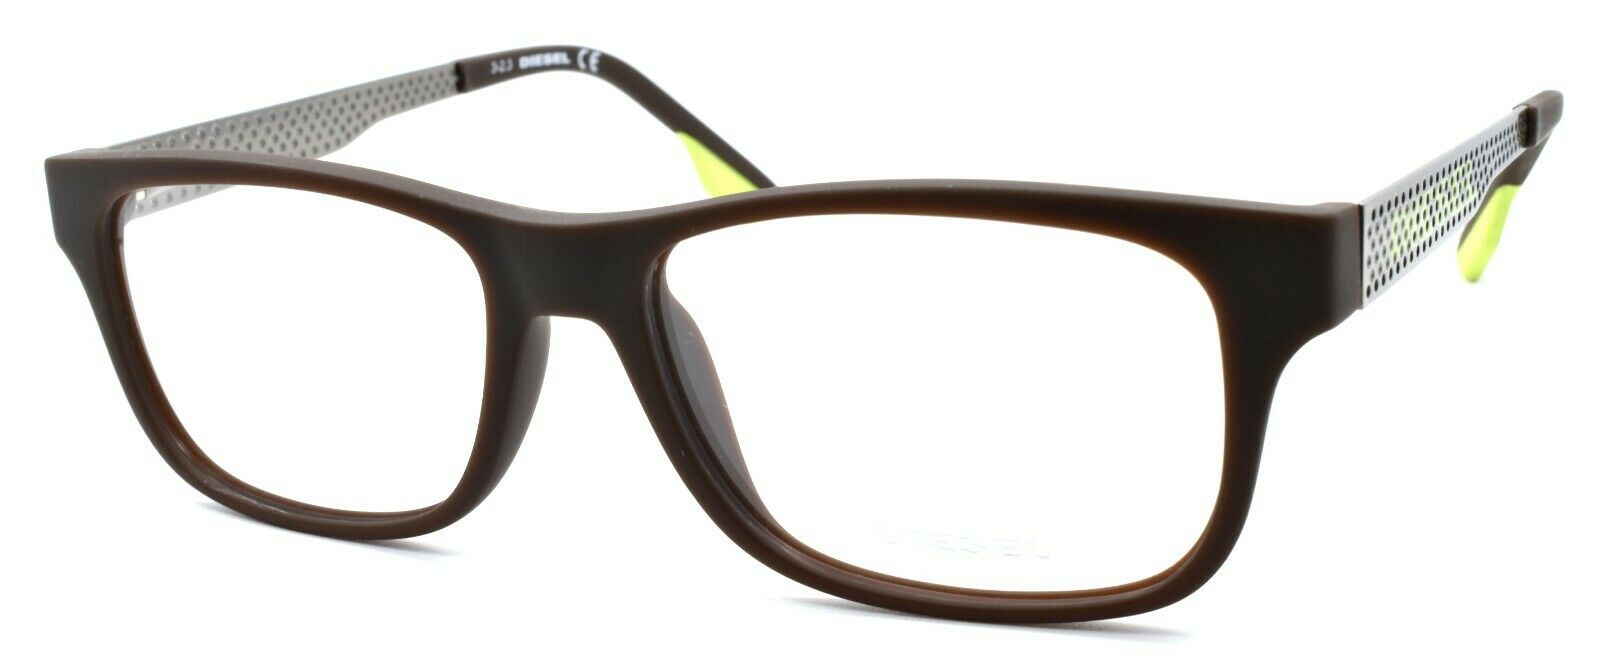 1-Diesel DL5042 049 Men's Eyeglasses Frames 54-16-140 Matte Dark Brown-664689575602-IKSpecs